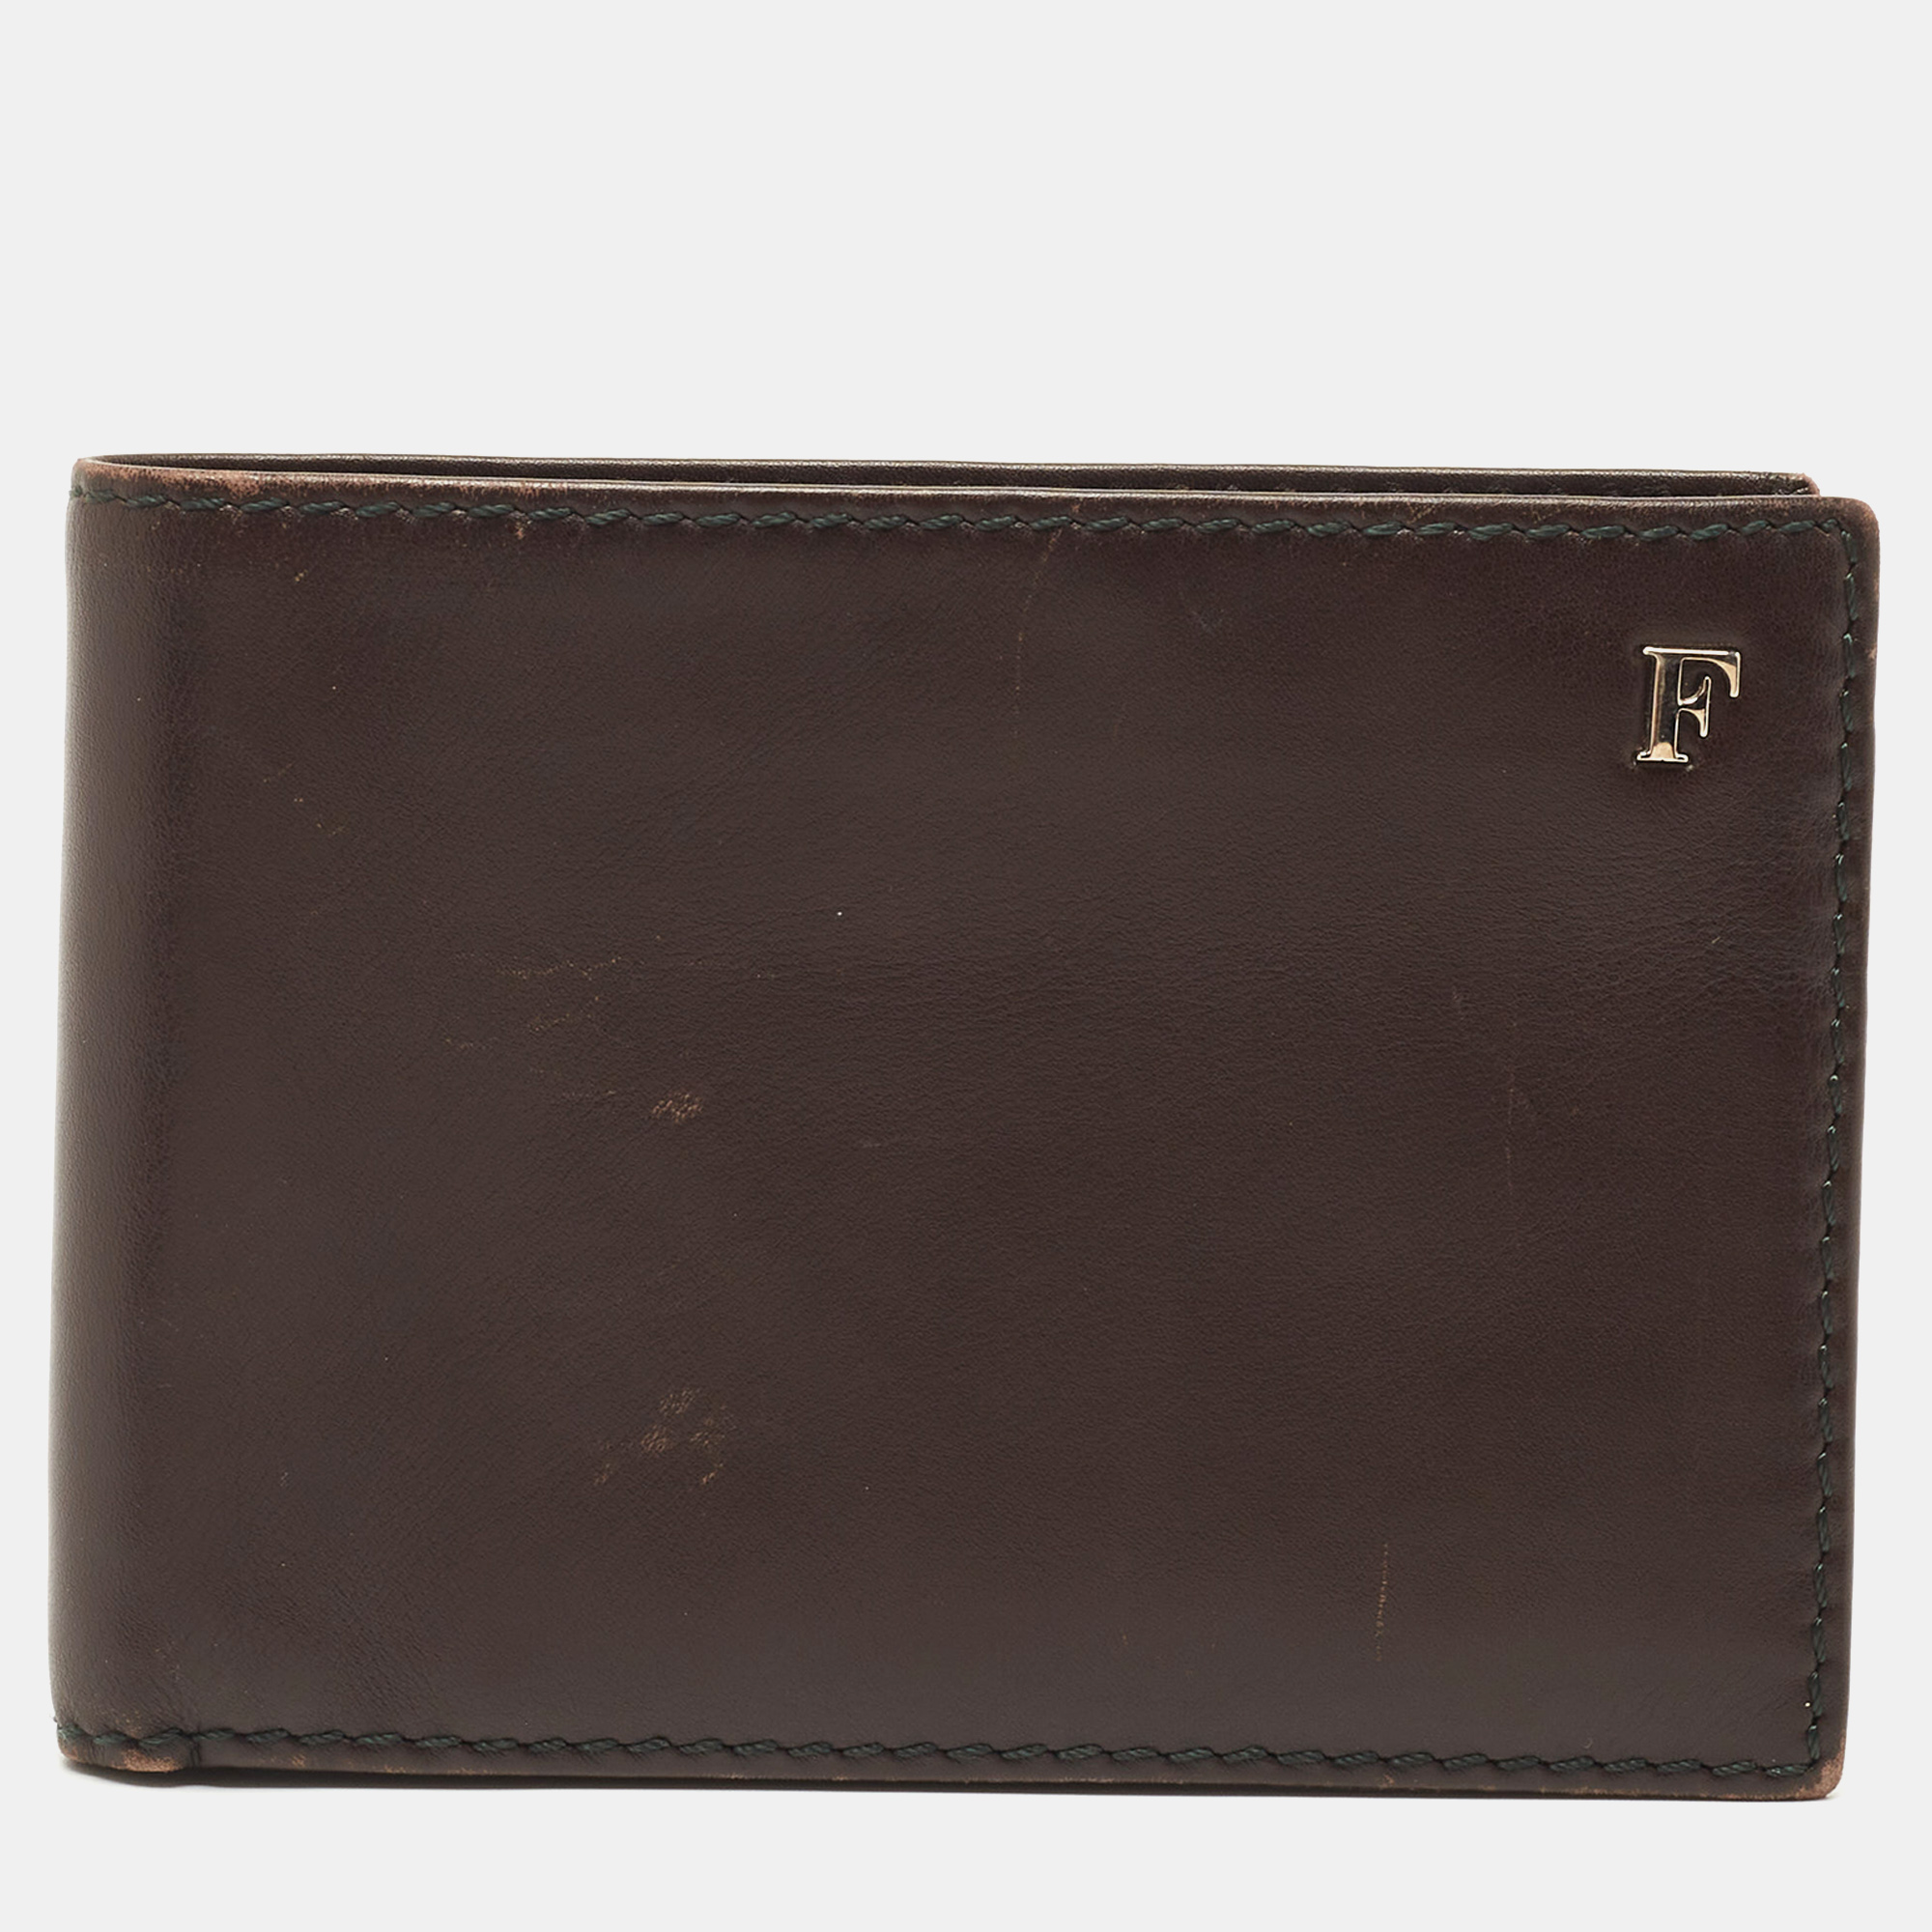 Gianfranco ferre brown leather bifold wallet